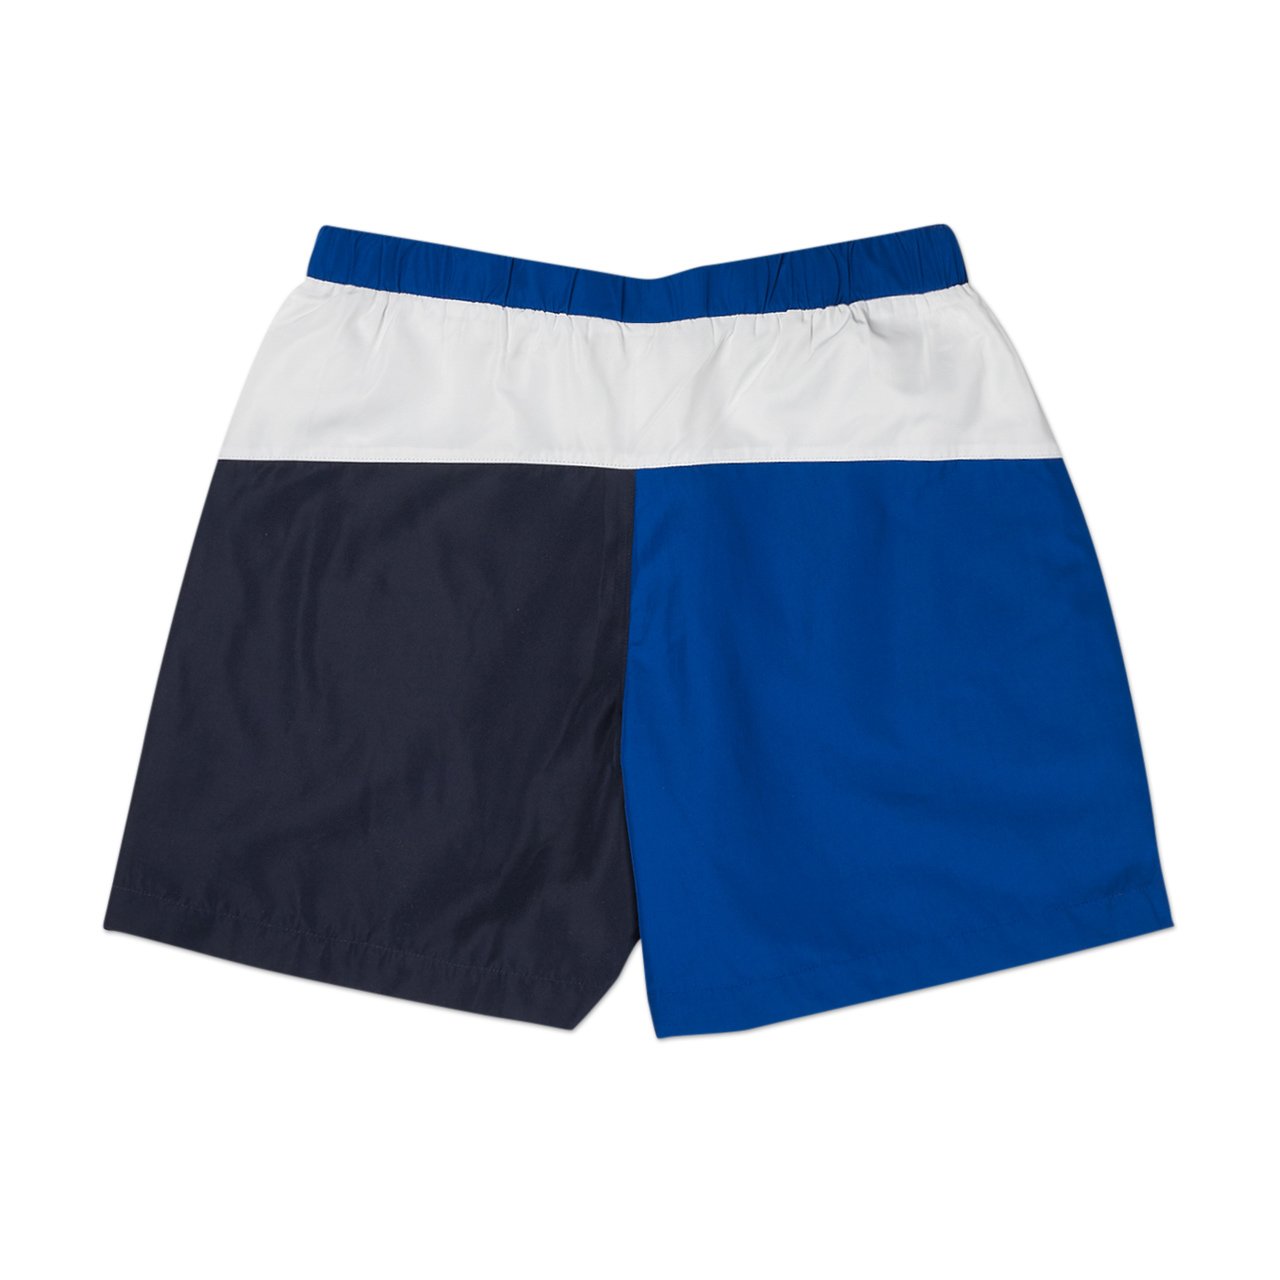 perks and mini s.loops swim shorts (blue) - 8353-b-nm - a.plus - Image - 2